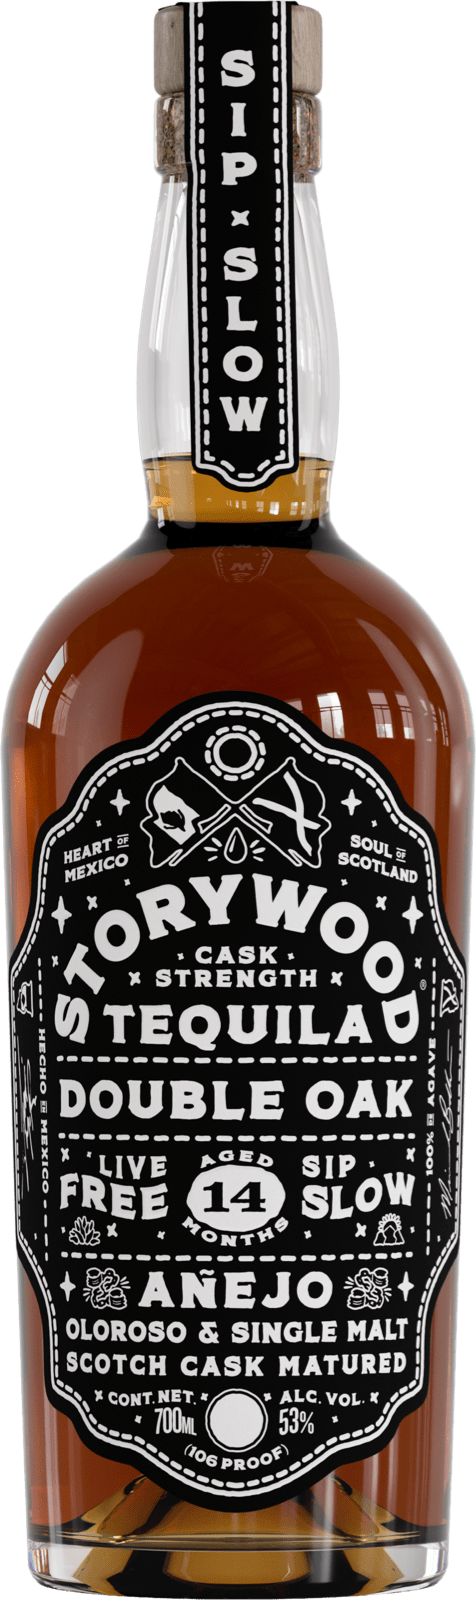 Storywood Double Oak anejo tequila